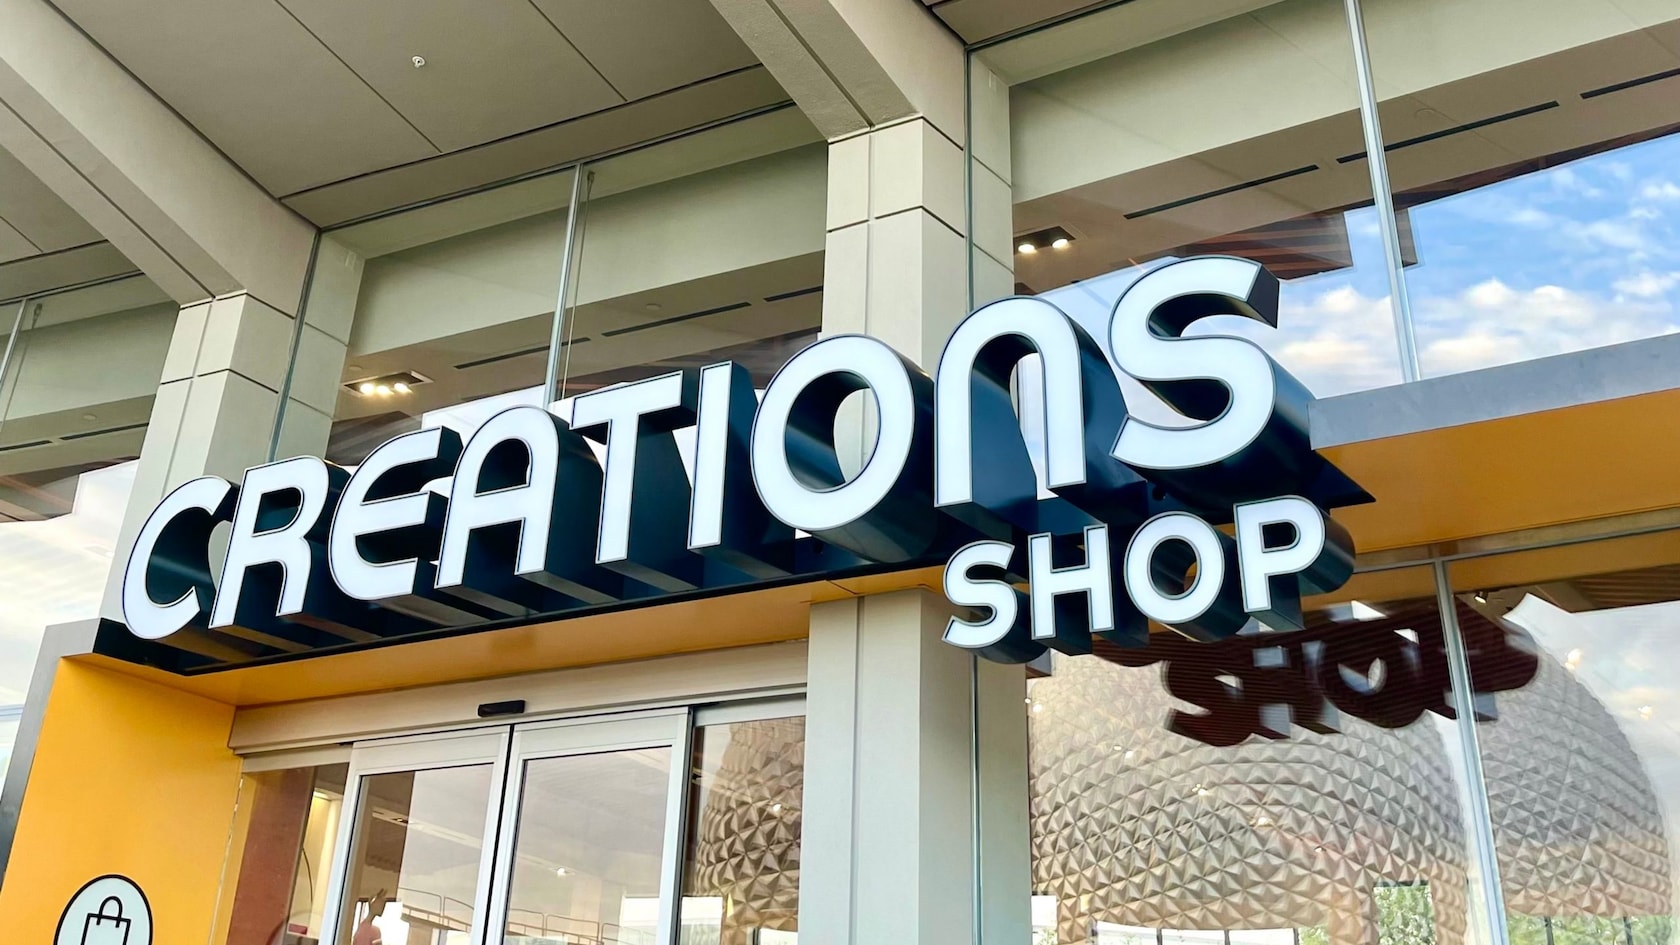 Creations Shopの店頭、入口上部に店名が掲げられている